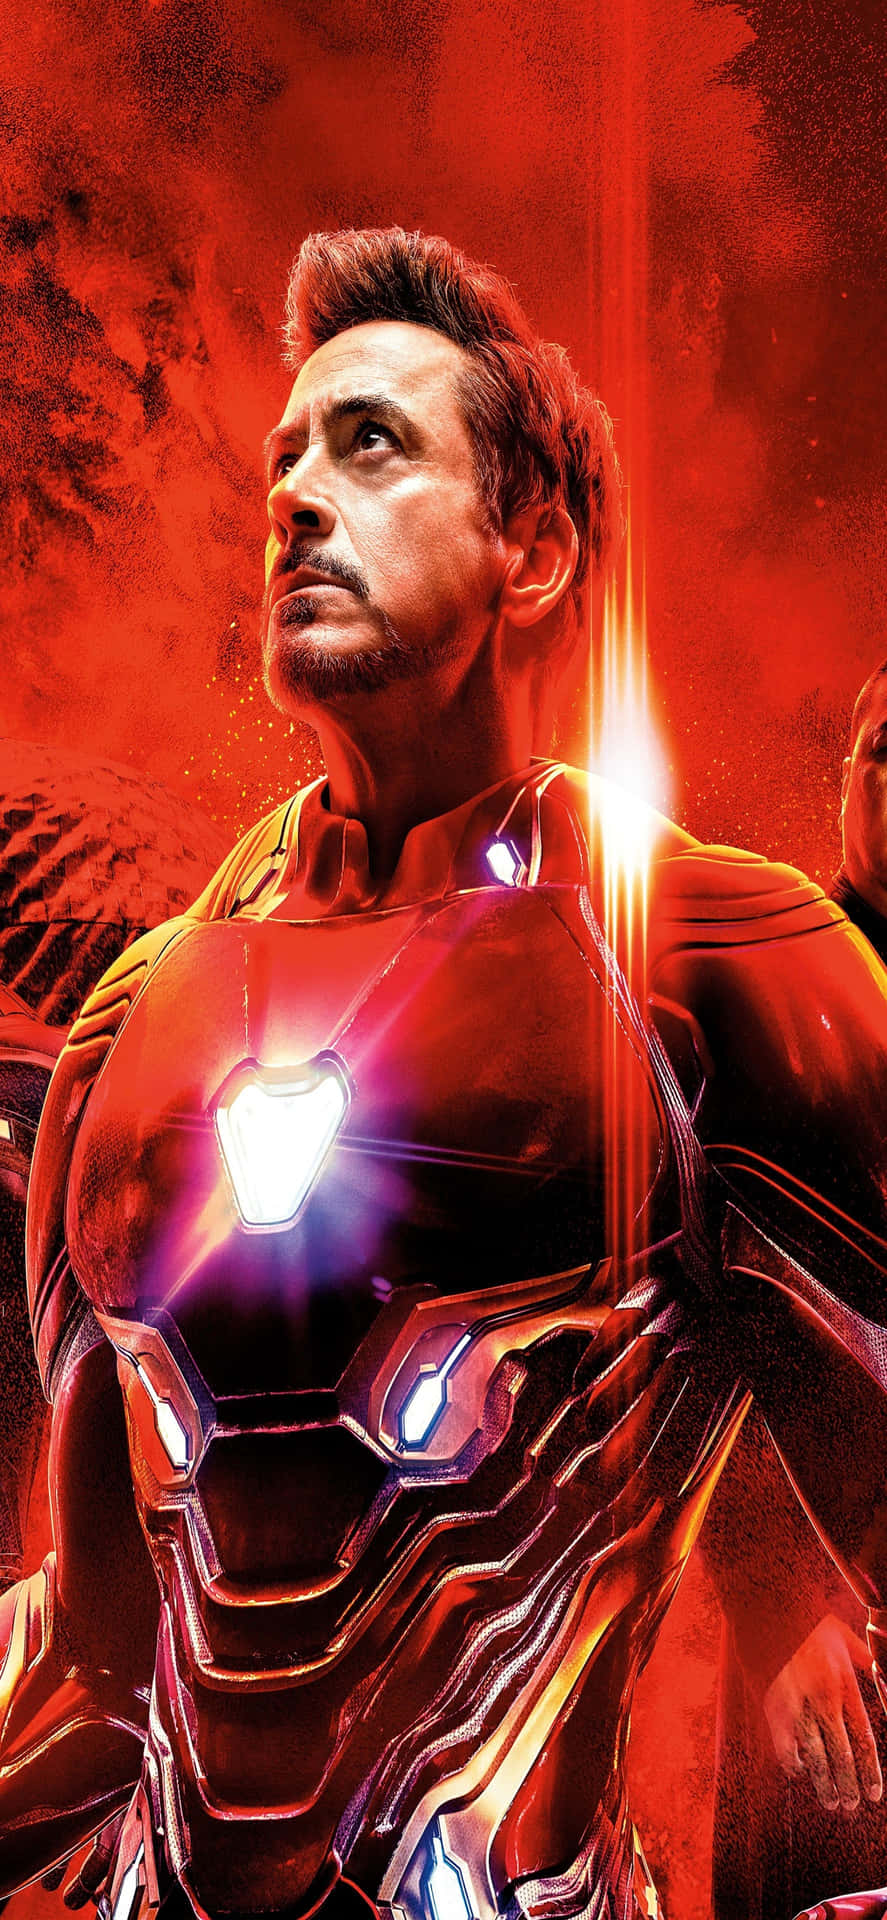 Fondode Pantalla Del Iphone X De Iron Man Sin Su Casco Con Fondo Rojo.